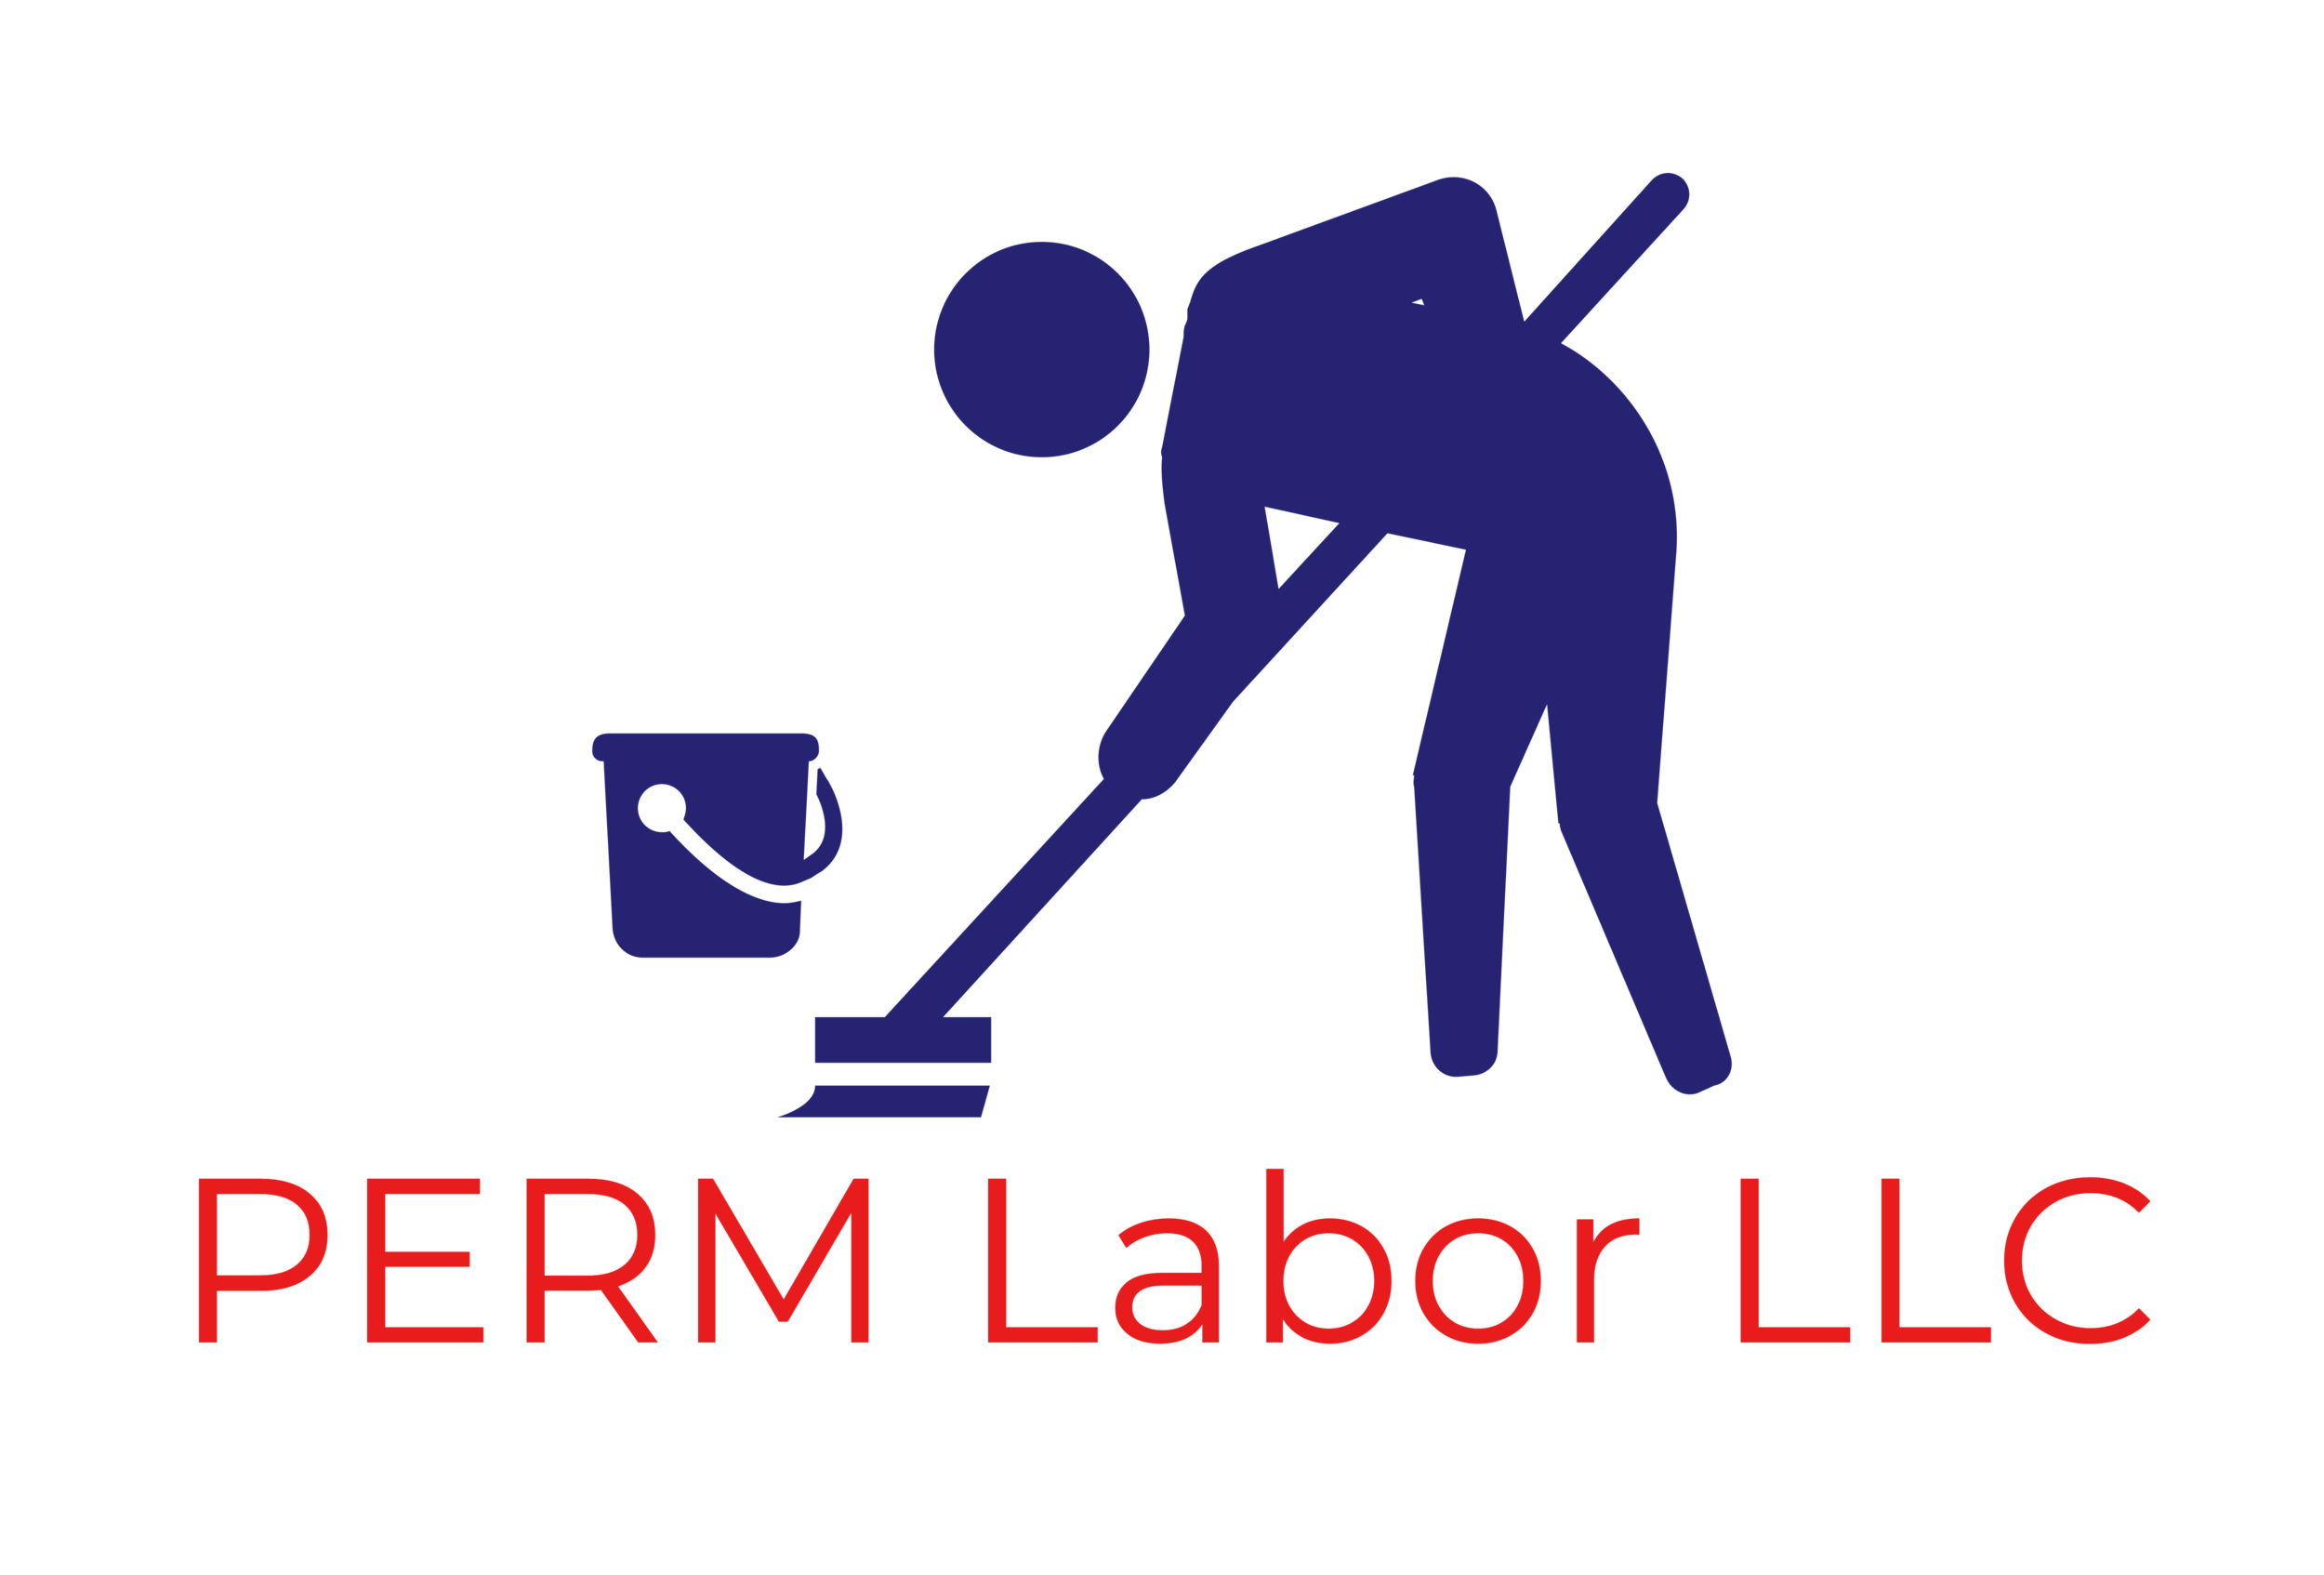 PERM Labor LLC